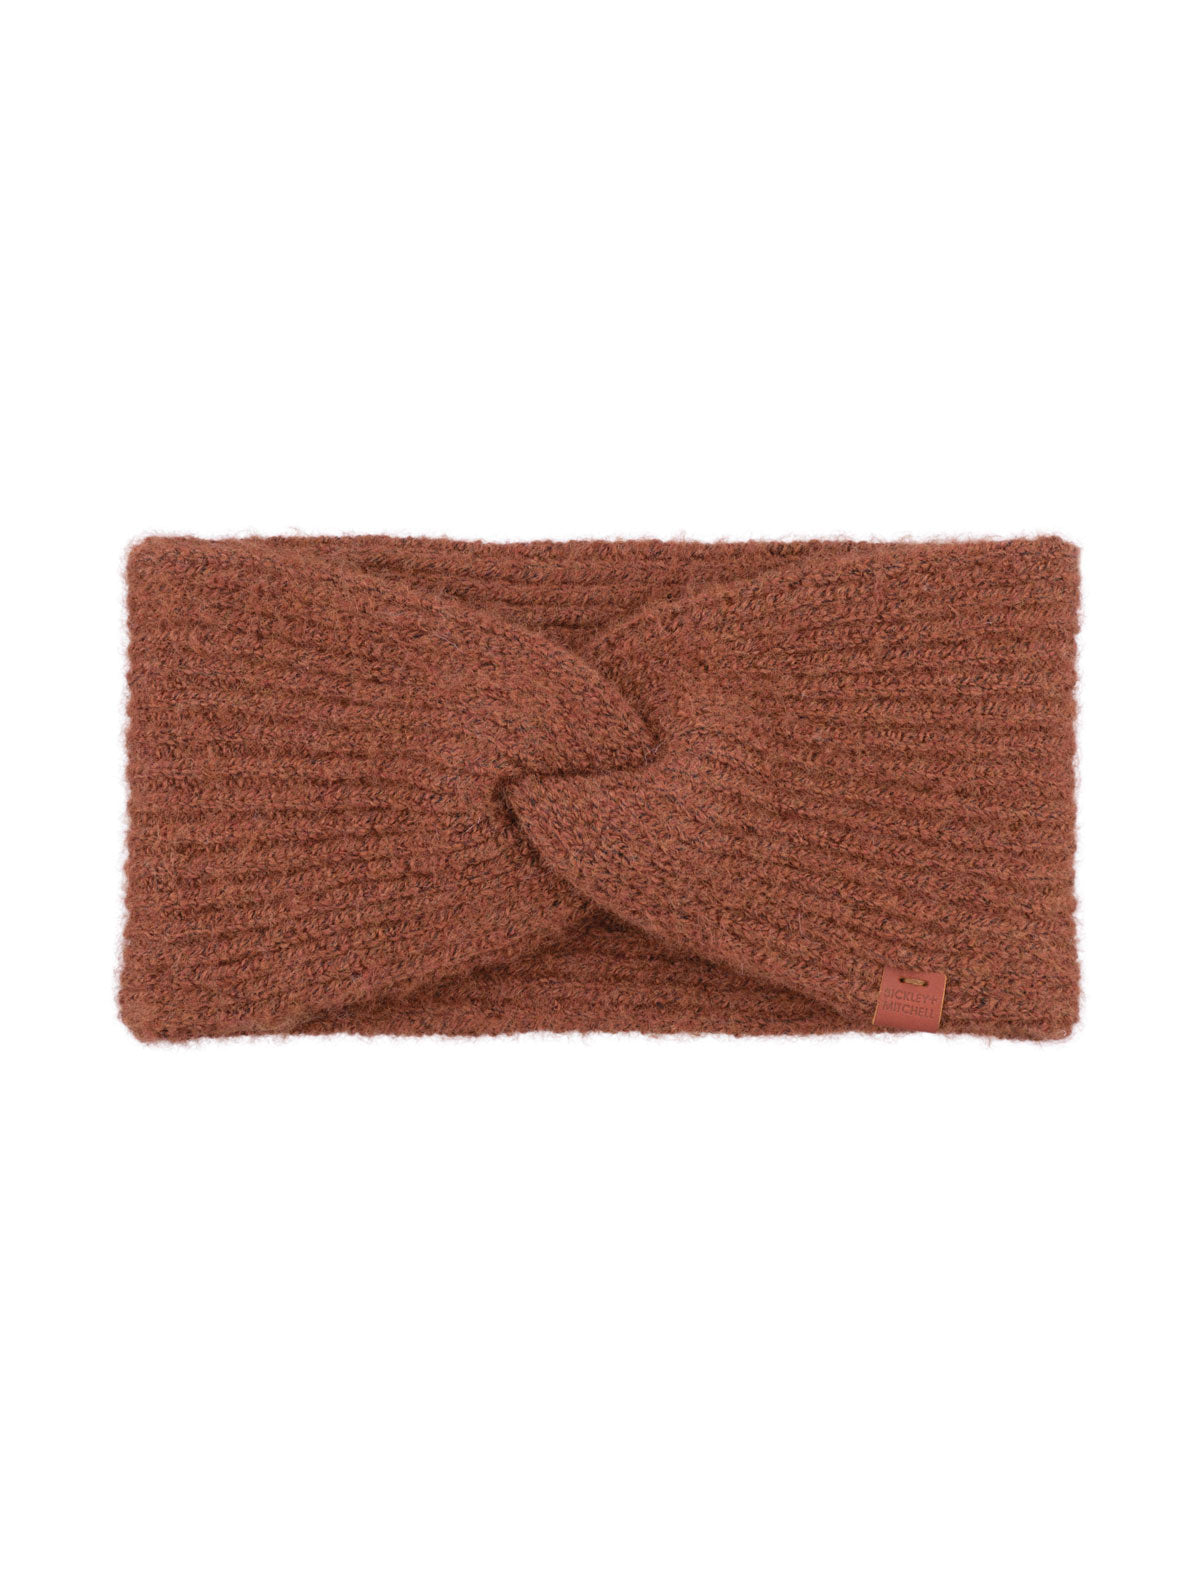 Soft rib knitted headband